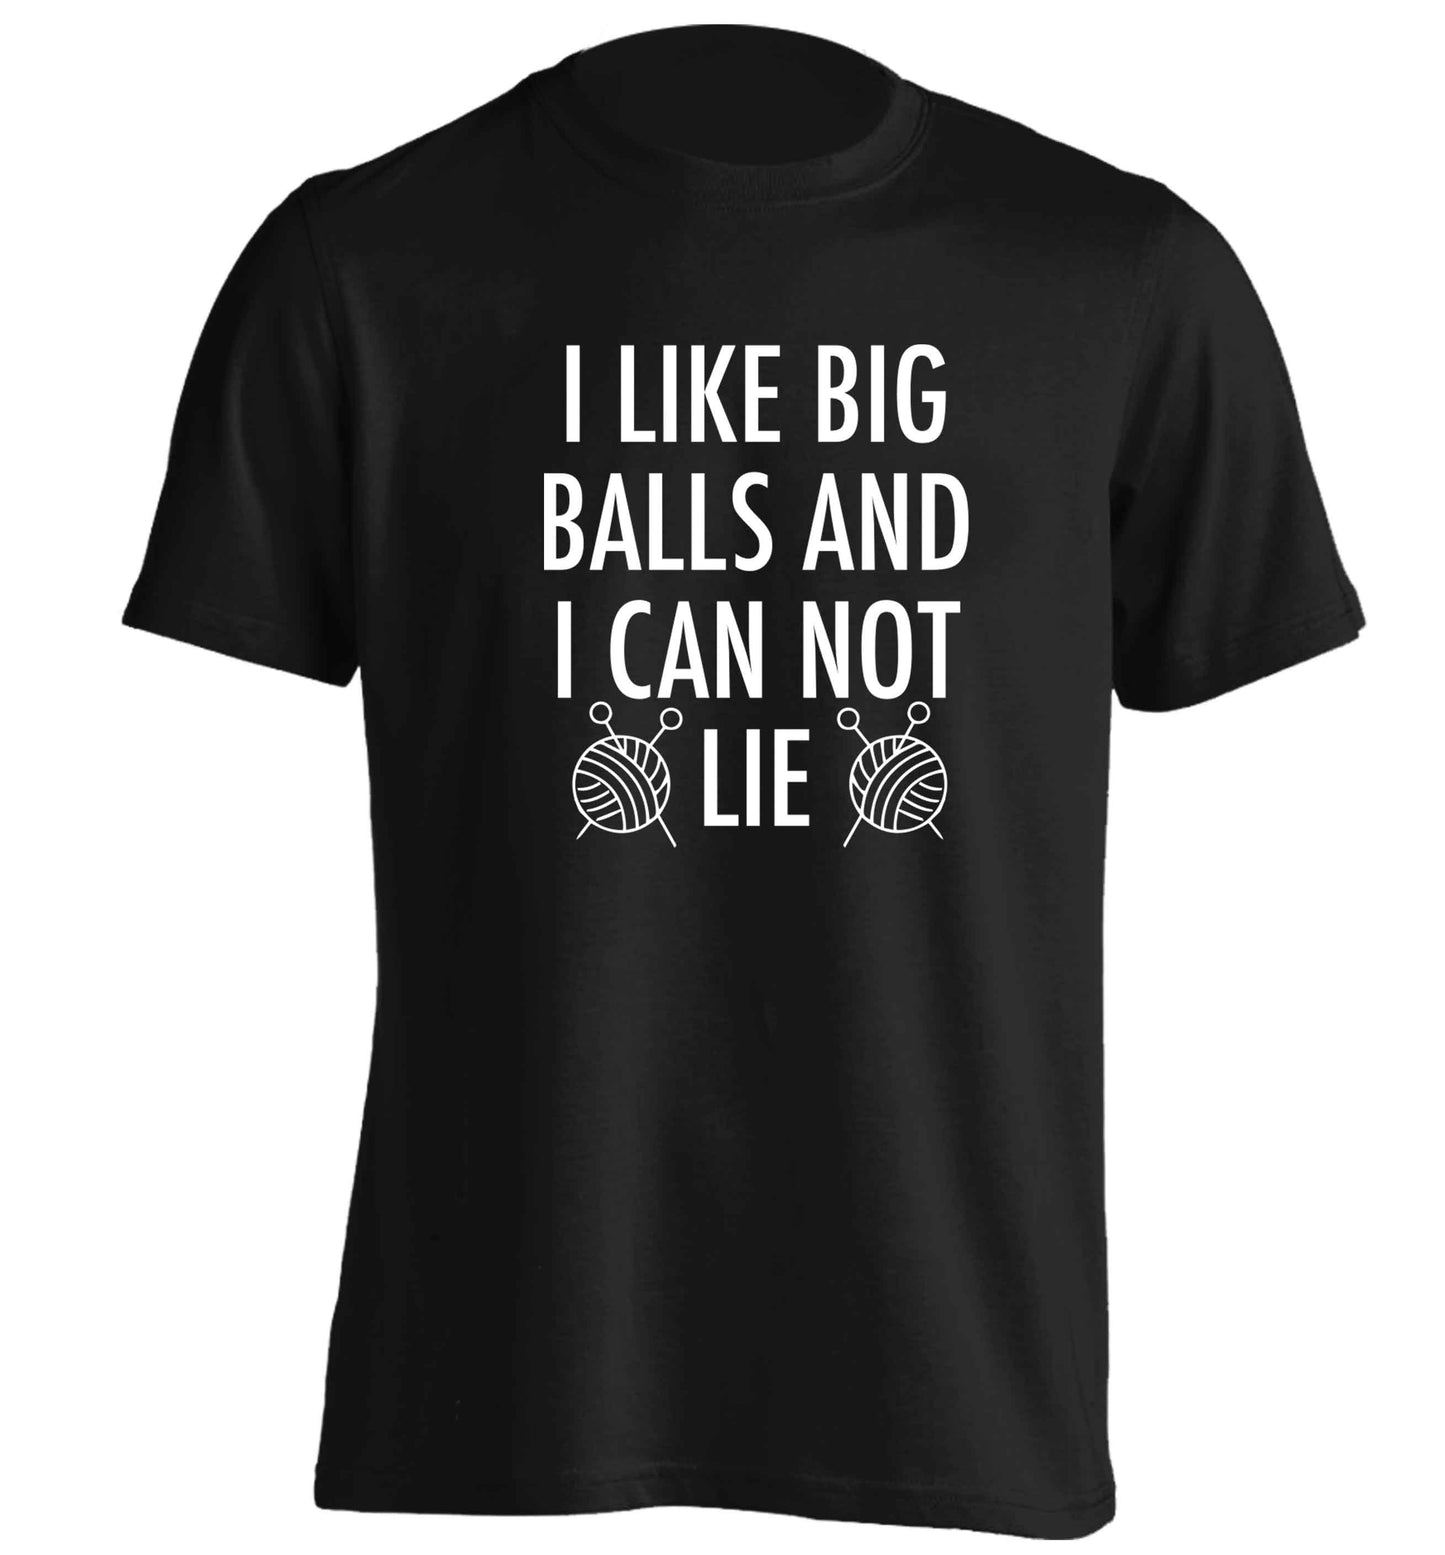 I like big balls and I can not lie adults unisex black Tshirt 2XL